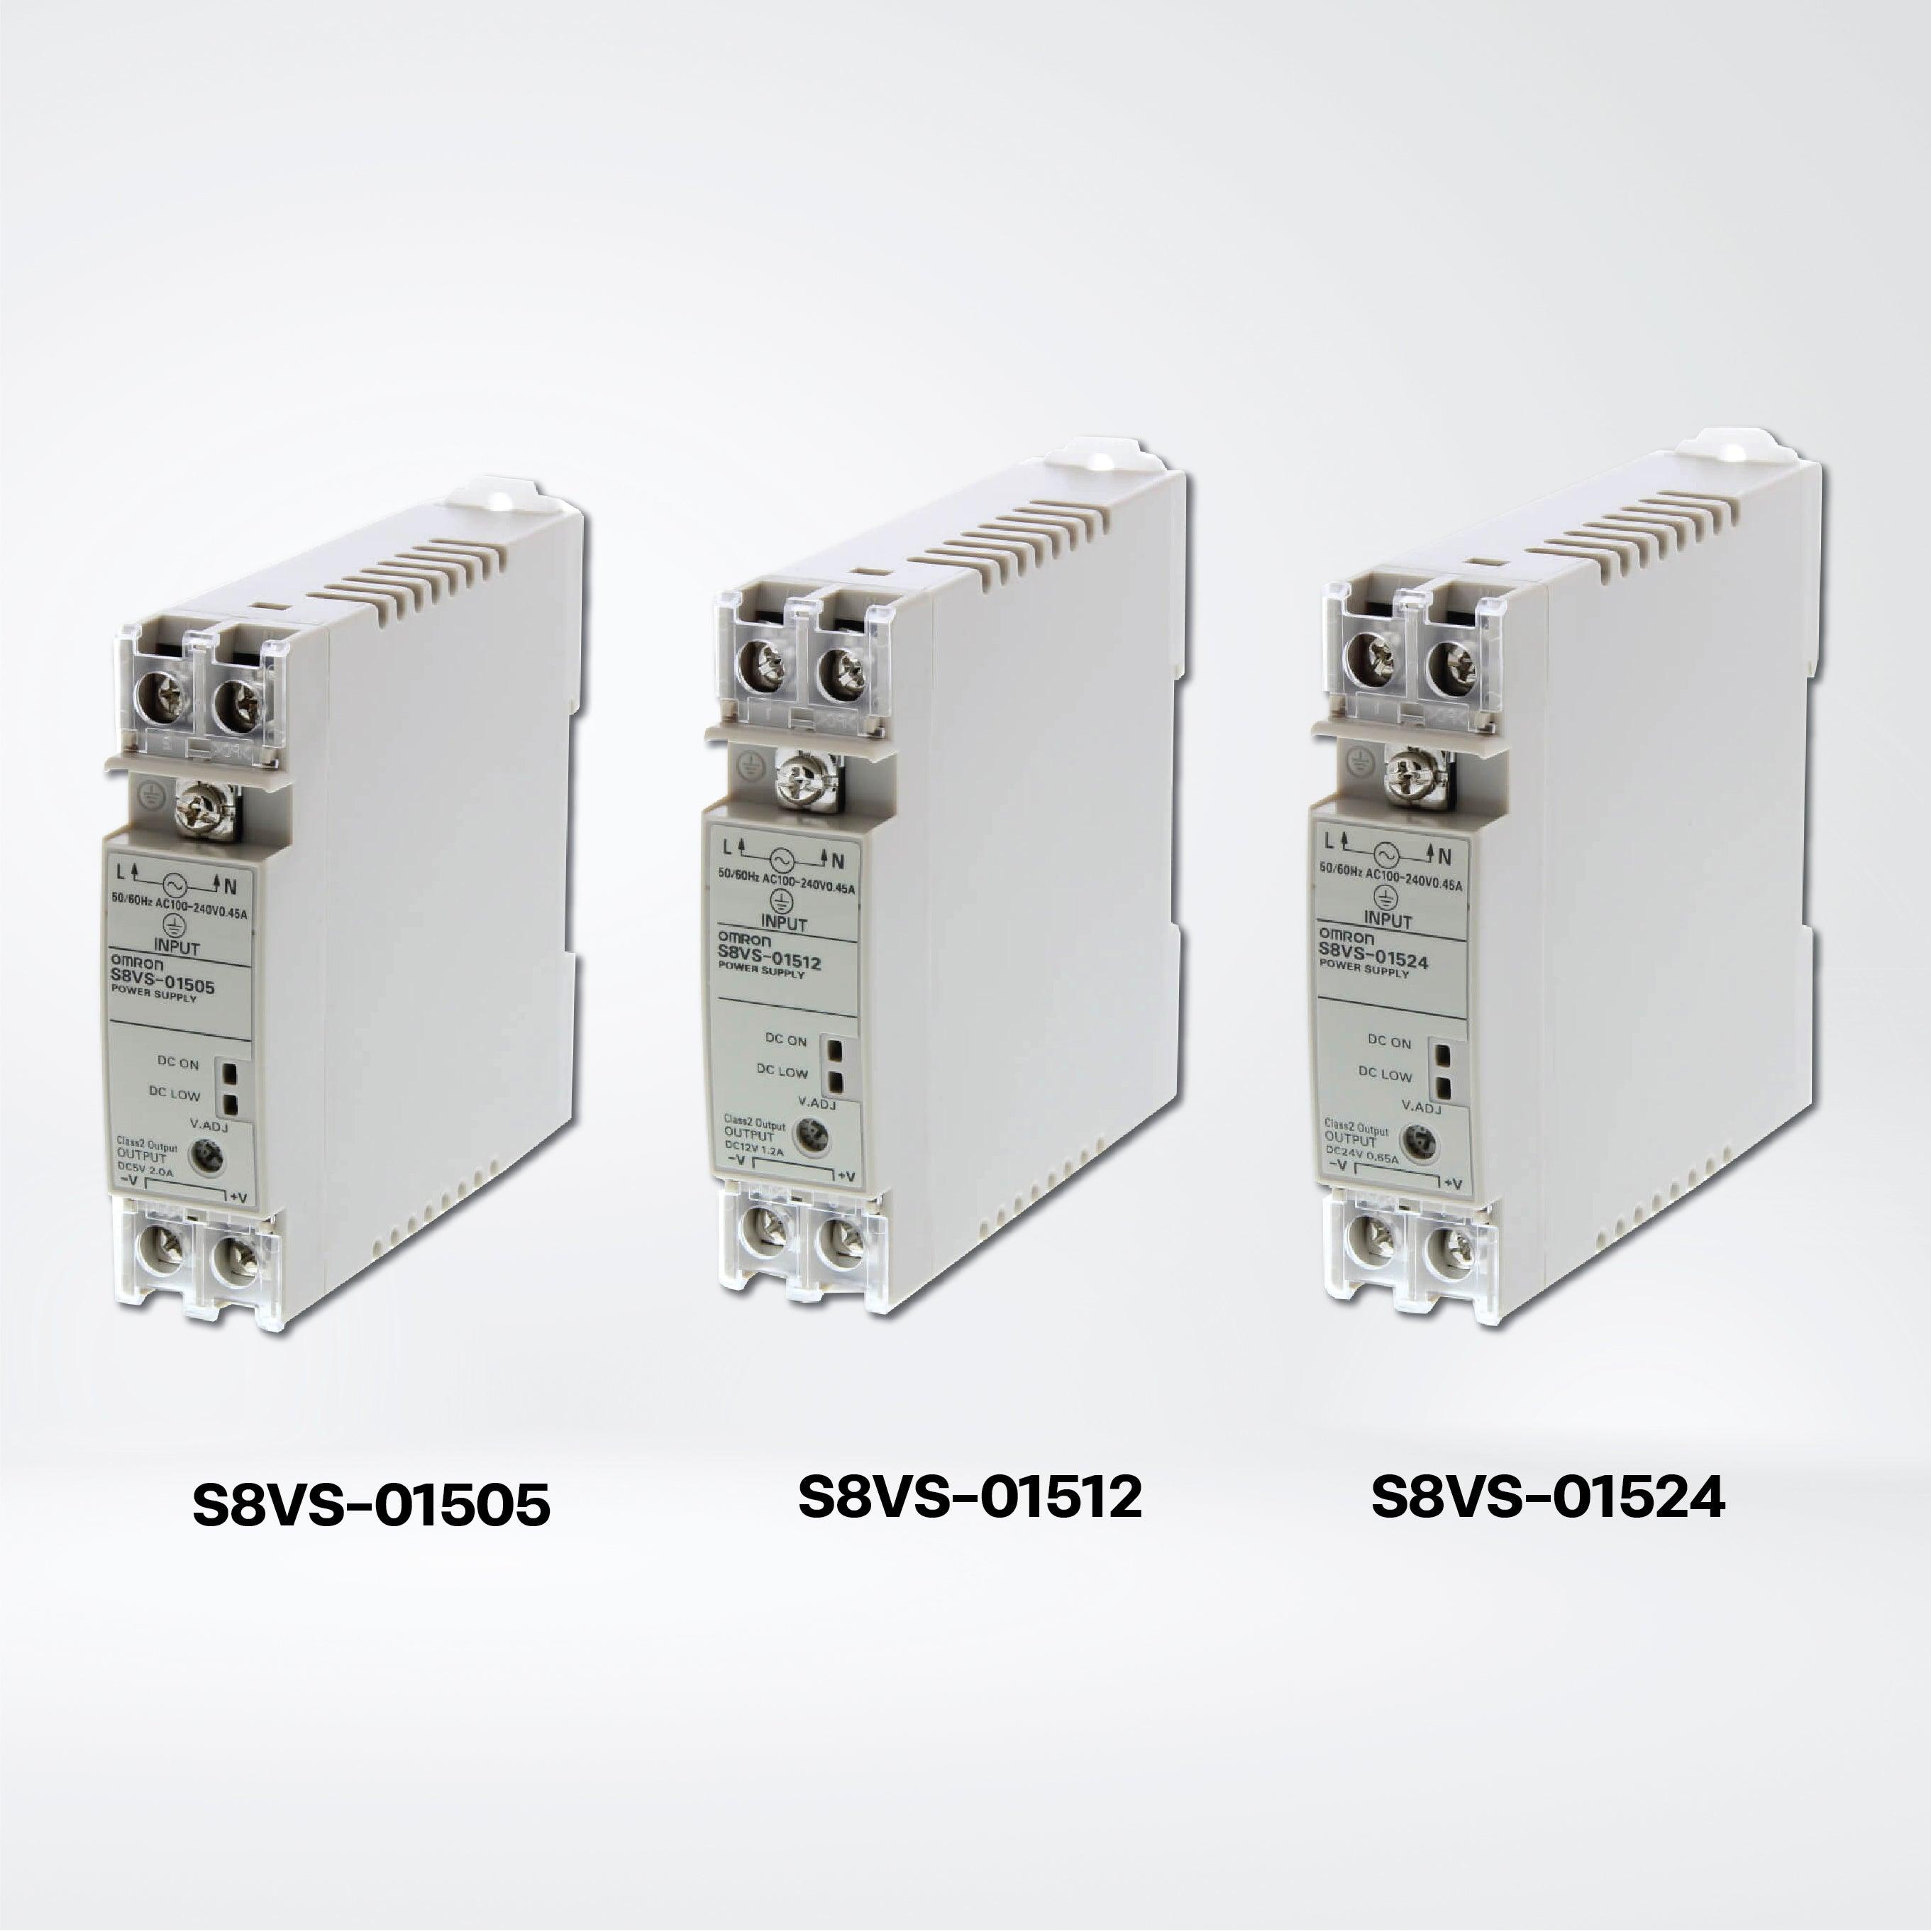 S8VS-01505 Power supply with Screw Terminal Blocks, plastic case, 10 W, 5 VDC - Riverplus